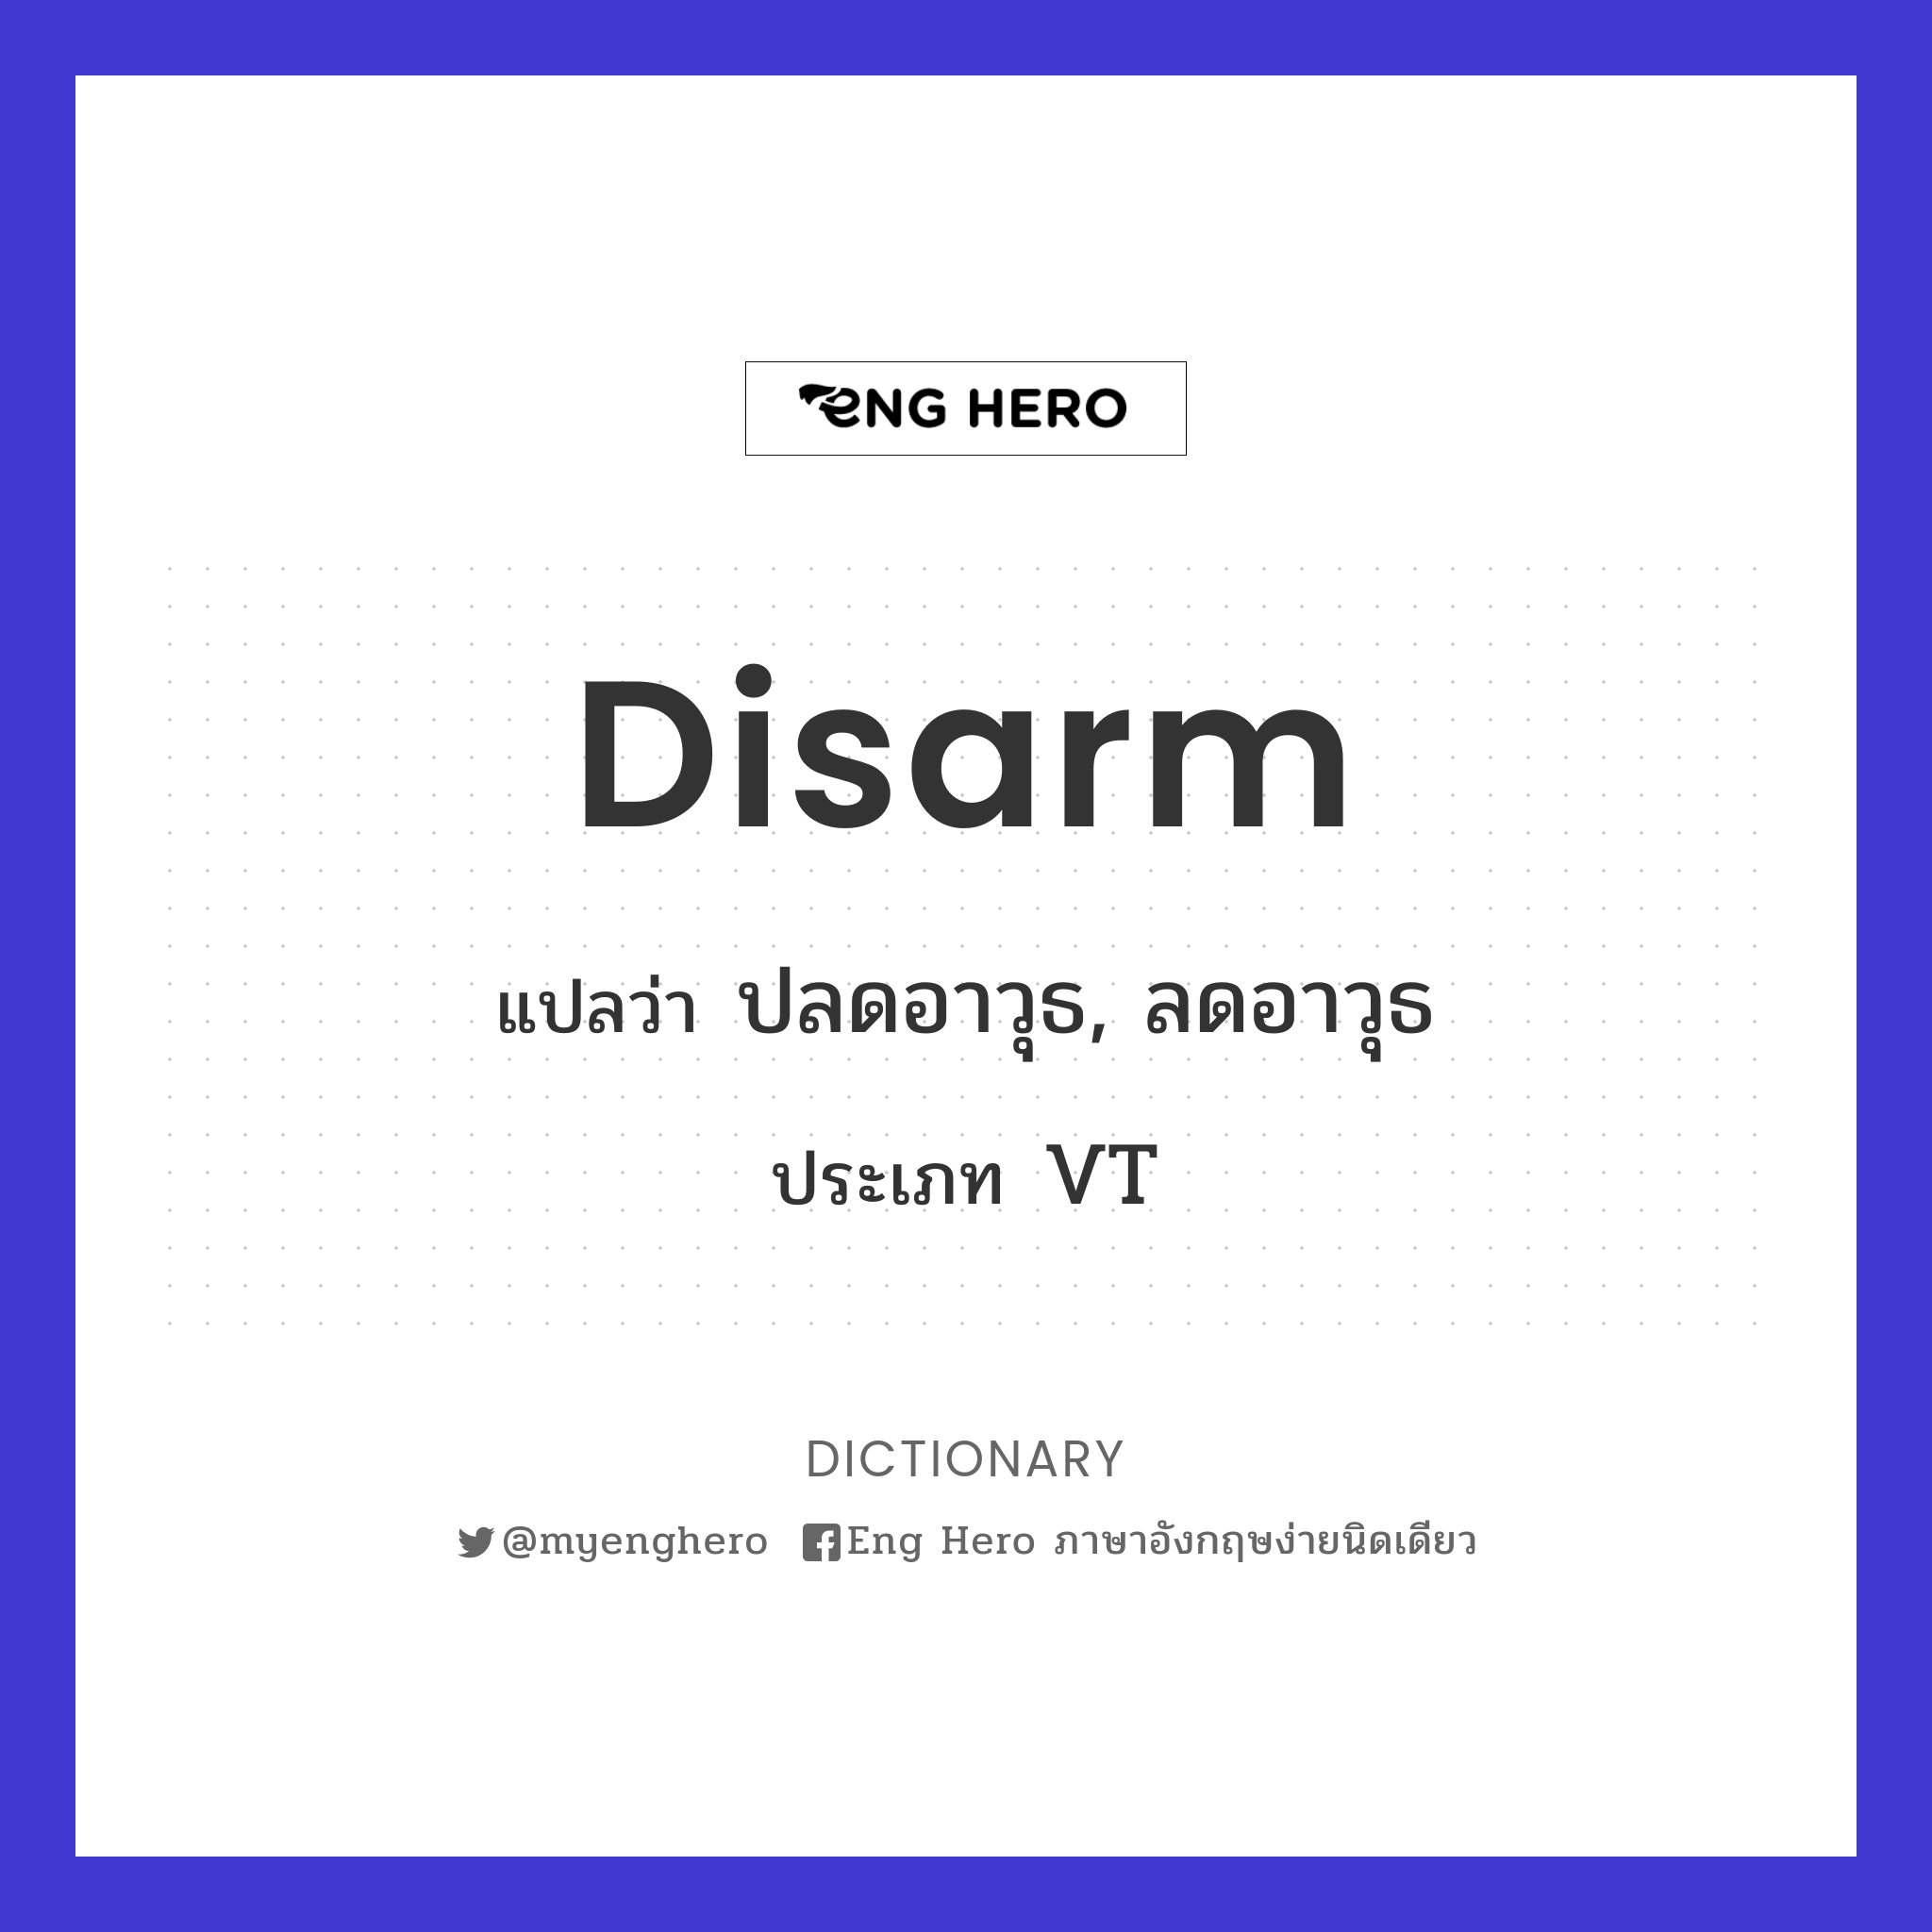 disarm